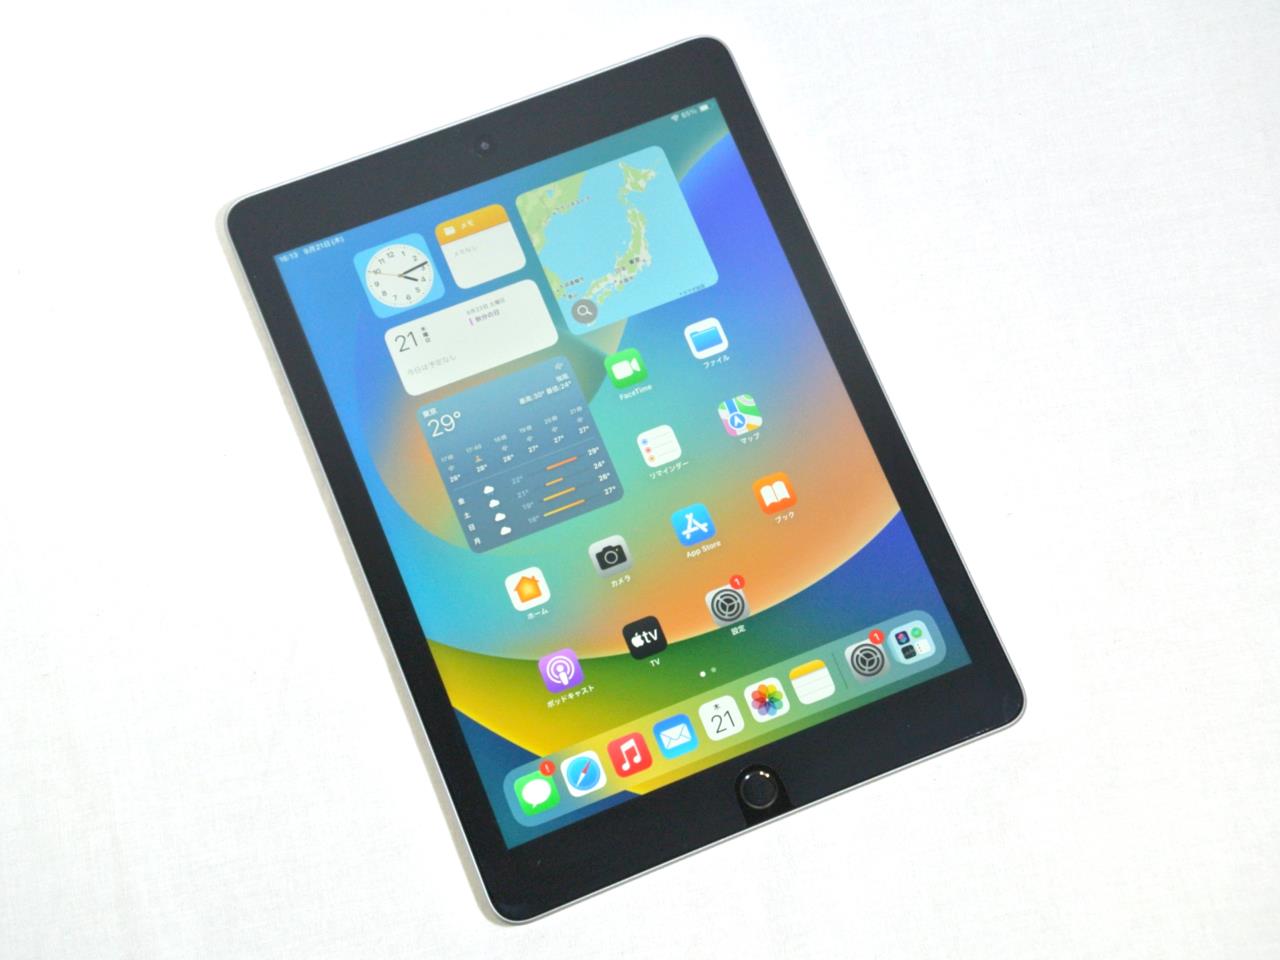 iPad 9.7インチ 第6世代 Wi-Fiモデル 32GB 2018年春モデル